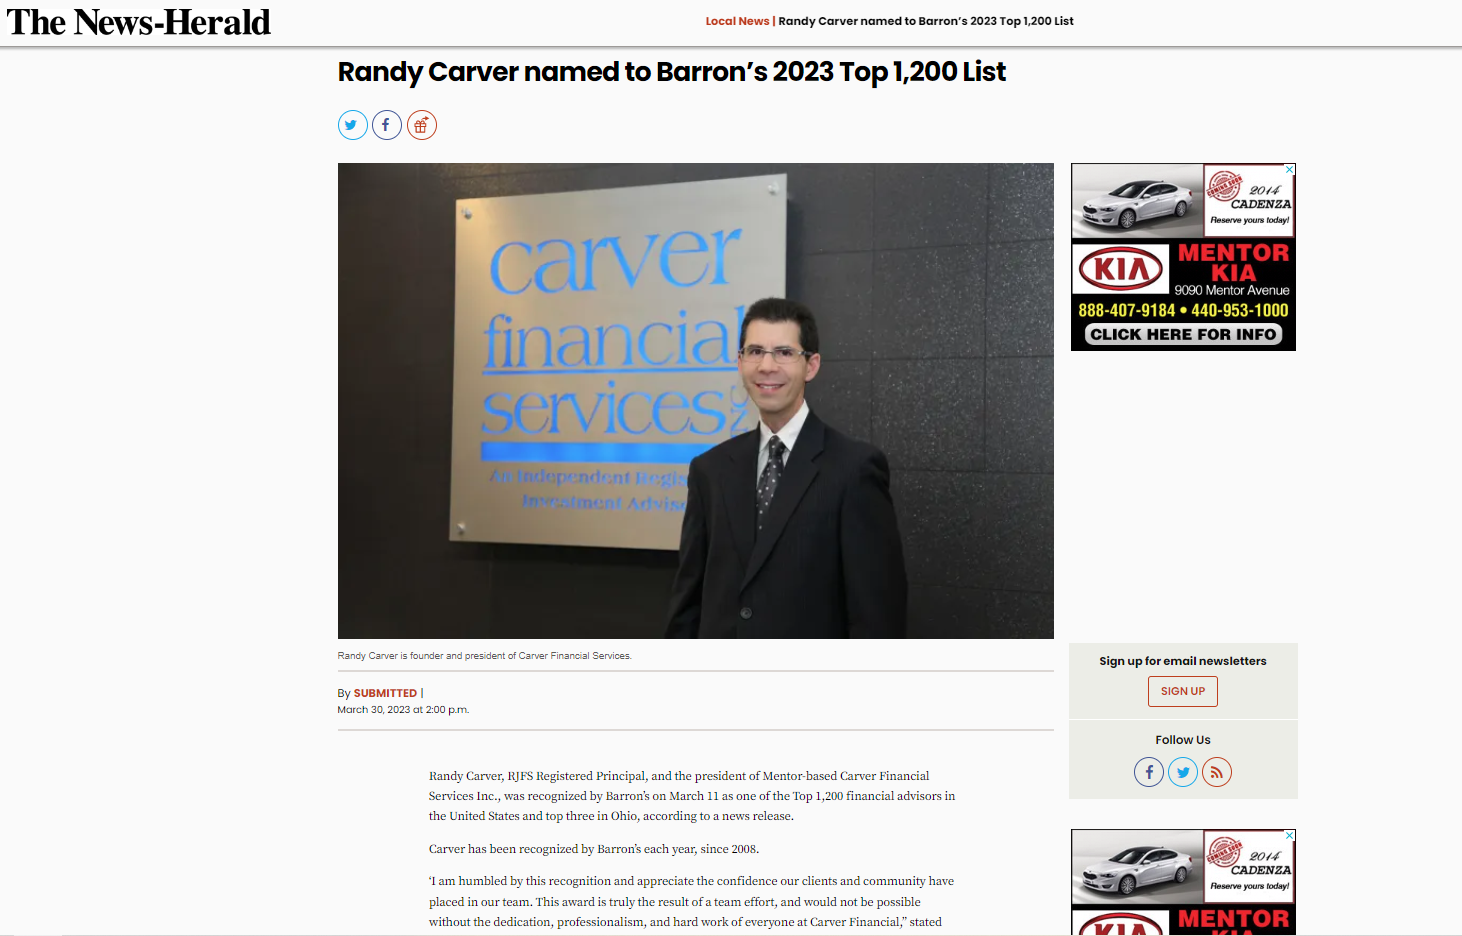 The News Herald recognizes Randy Carver